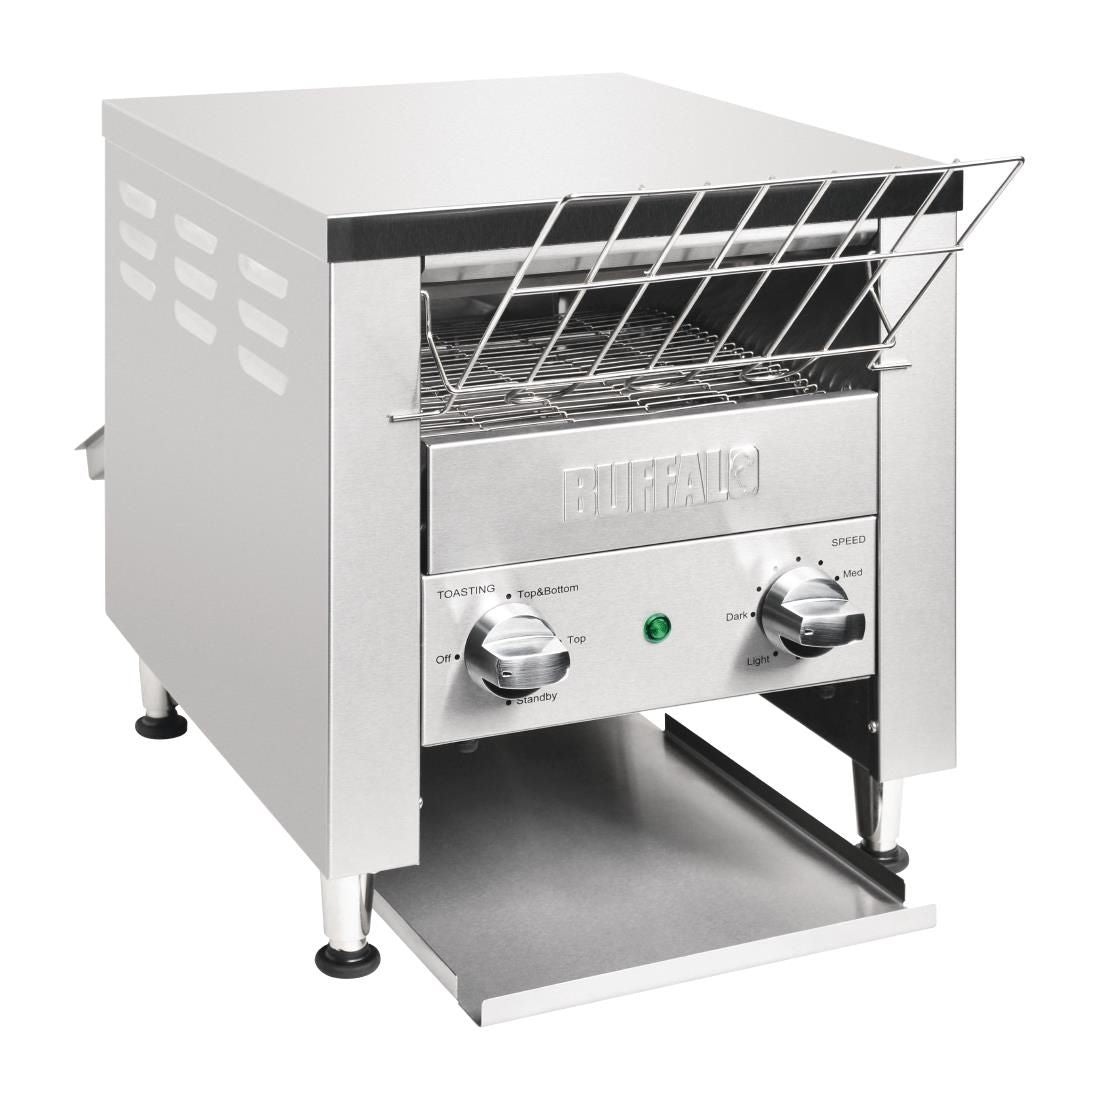 DB175 Buffalo Conveyor Toaster JD Catering Equipment Solutions Ltd